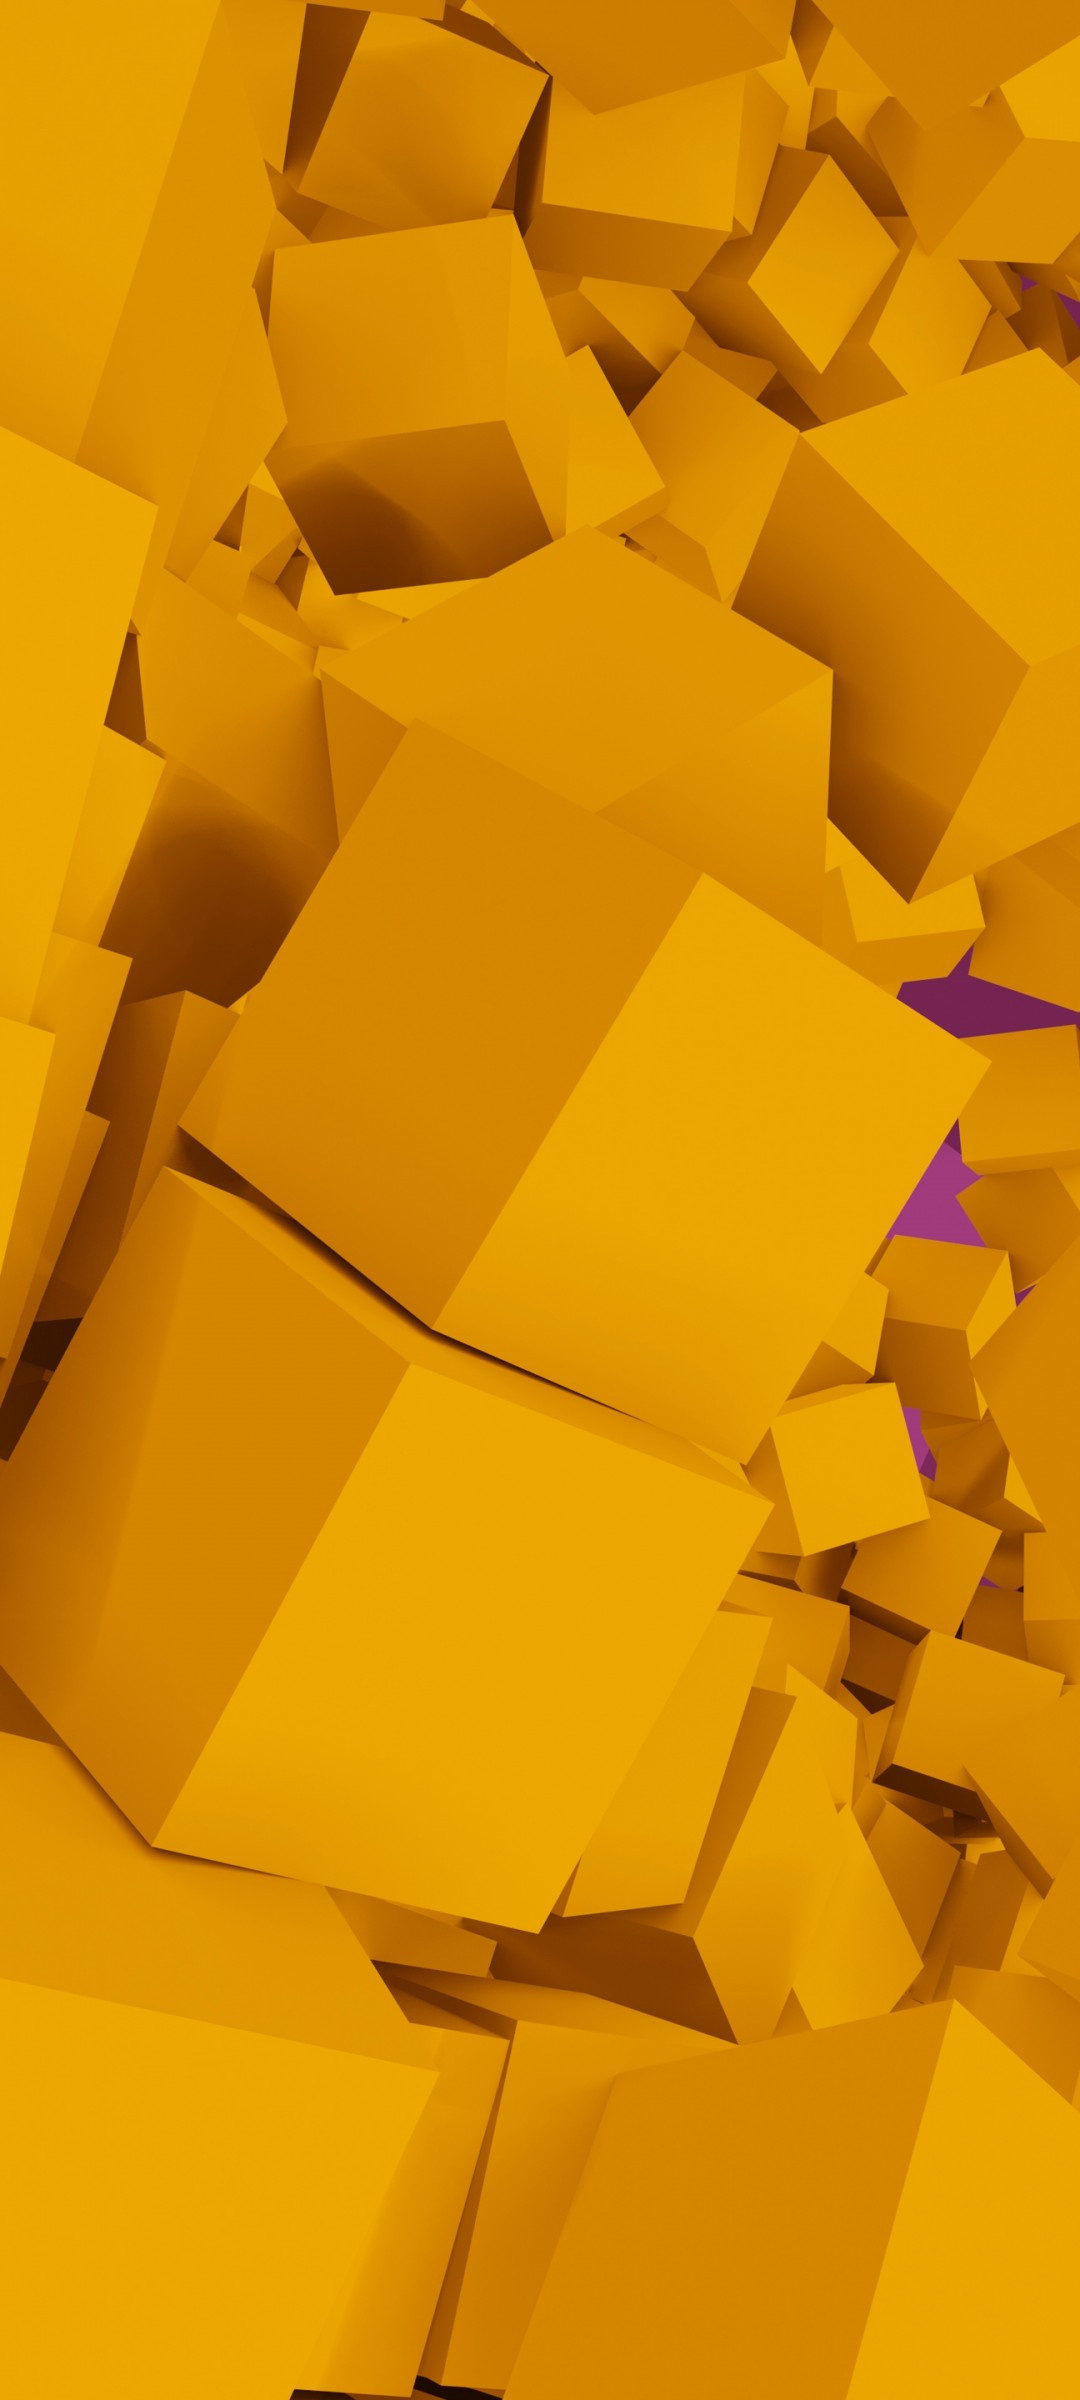 3D objects wallpaper, Yellow cubes design, Geometric shapes inspiration, Technology theme, 1080x2400 HD Phone